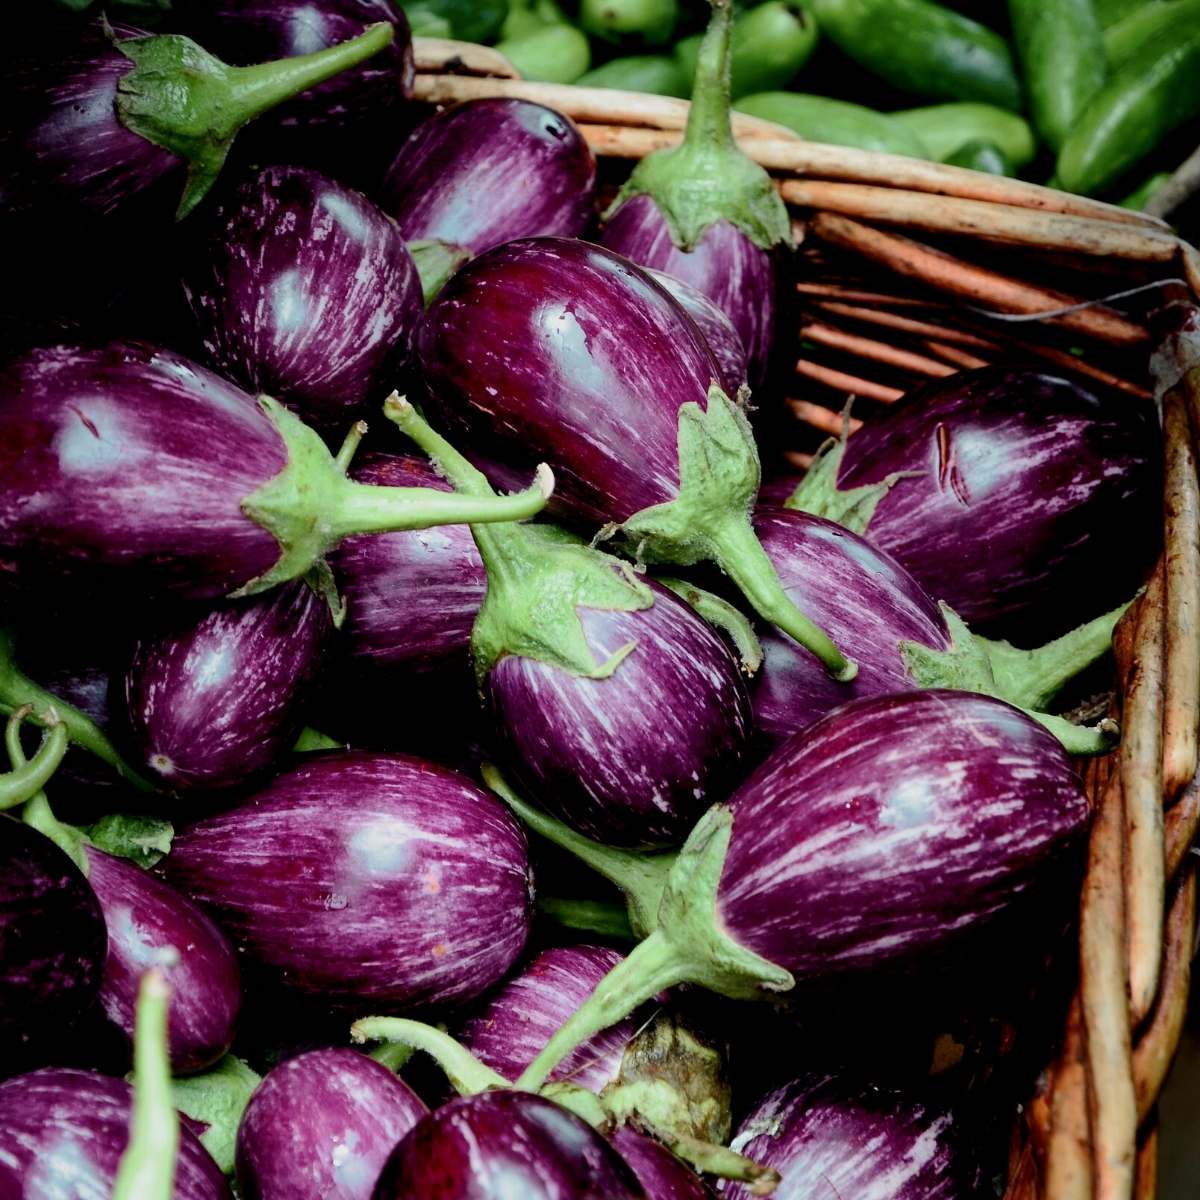 Eggplants in a basket.